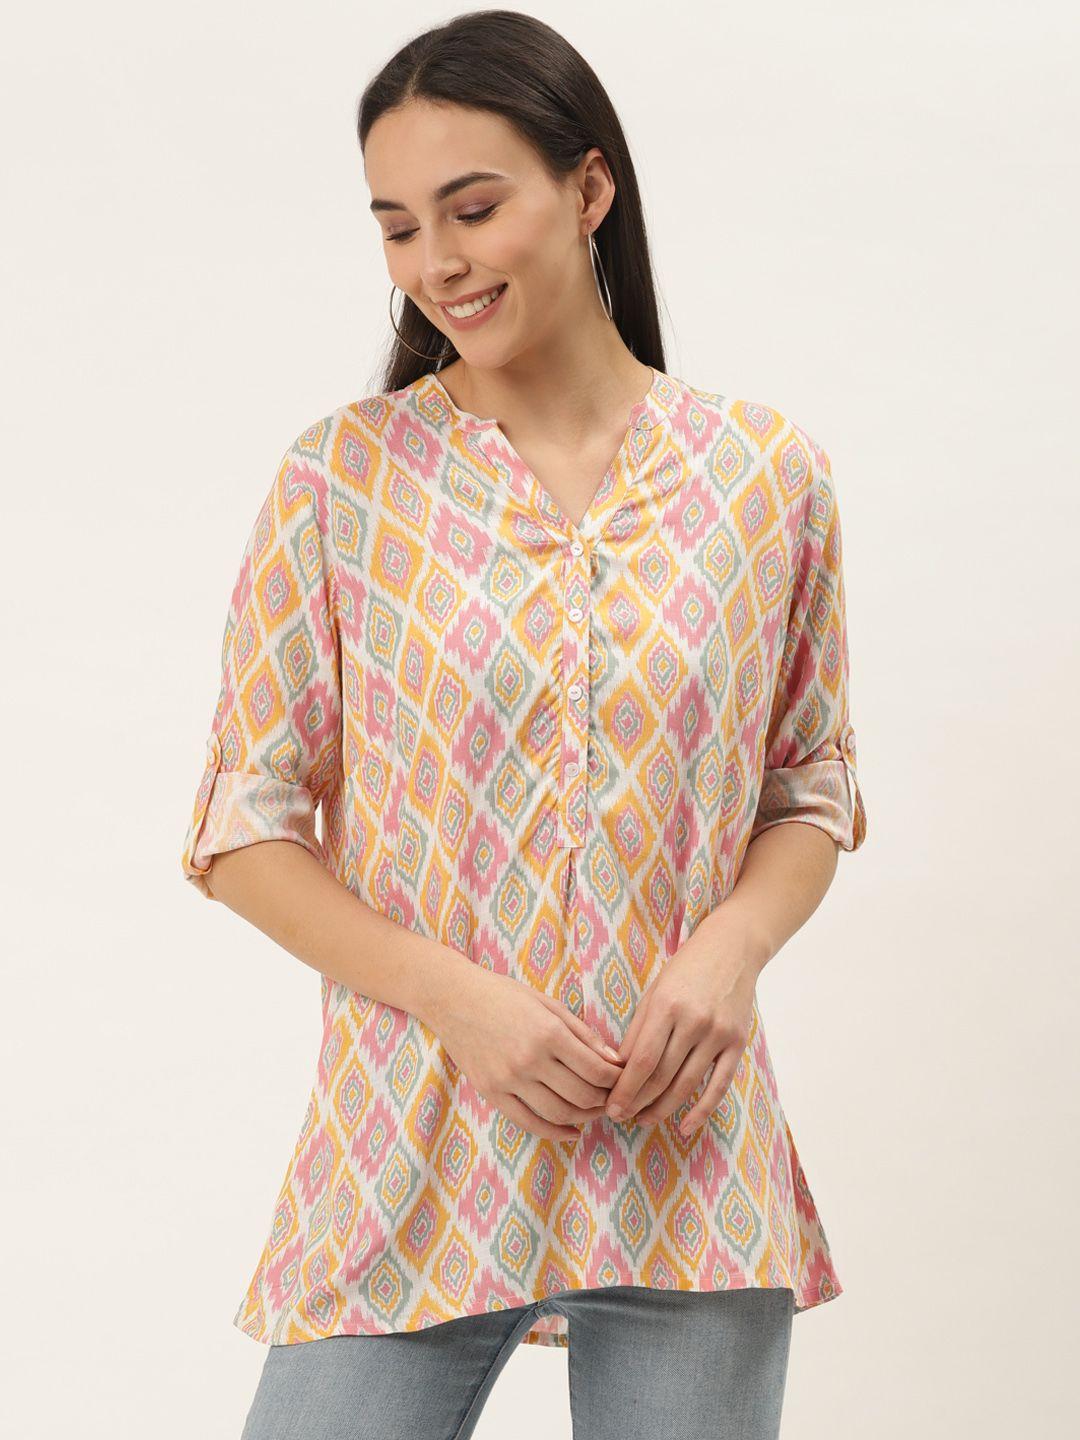 zizo by namrata bajaj women off-white & pink liva printed shirt style top